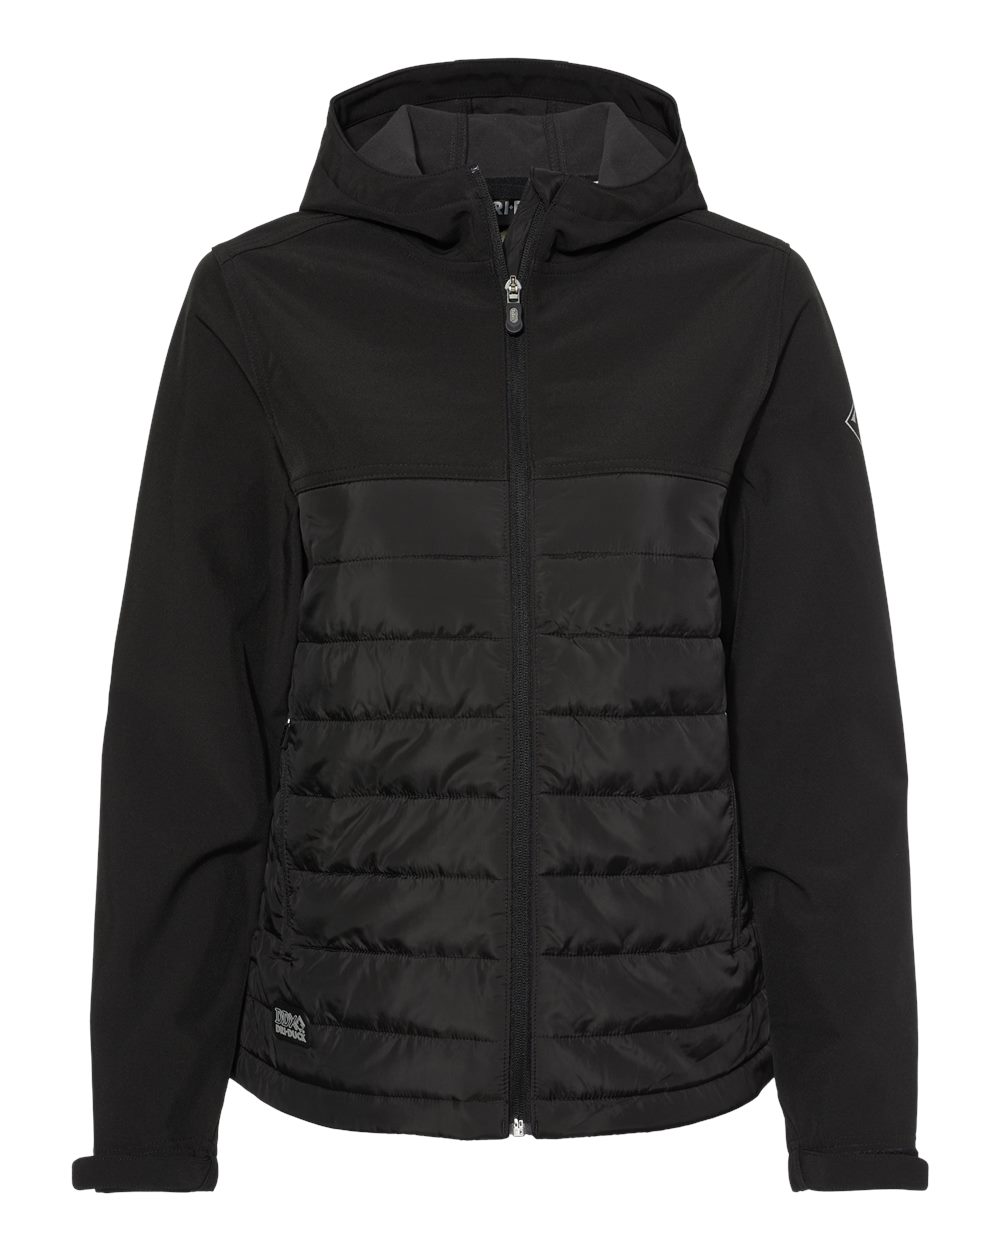 Weatherproof - Women's PillowPac Puffer Jacket - 211137 - Black